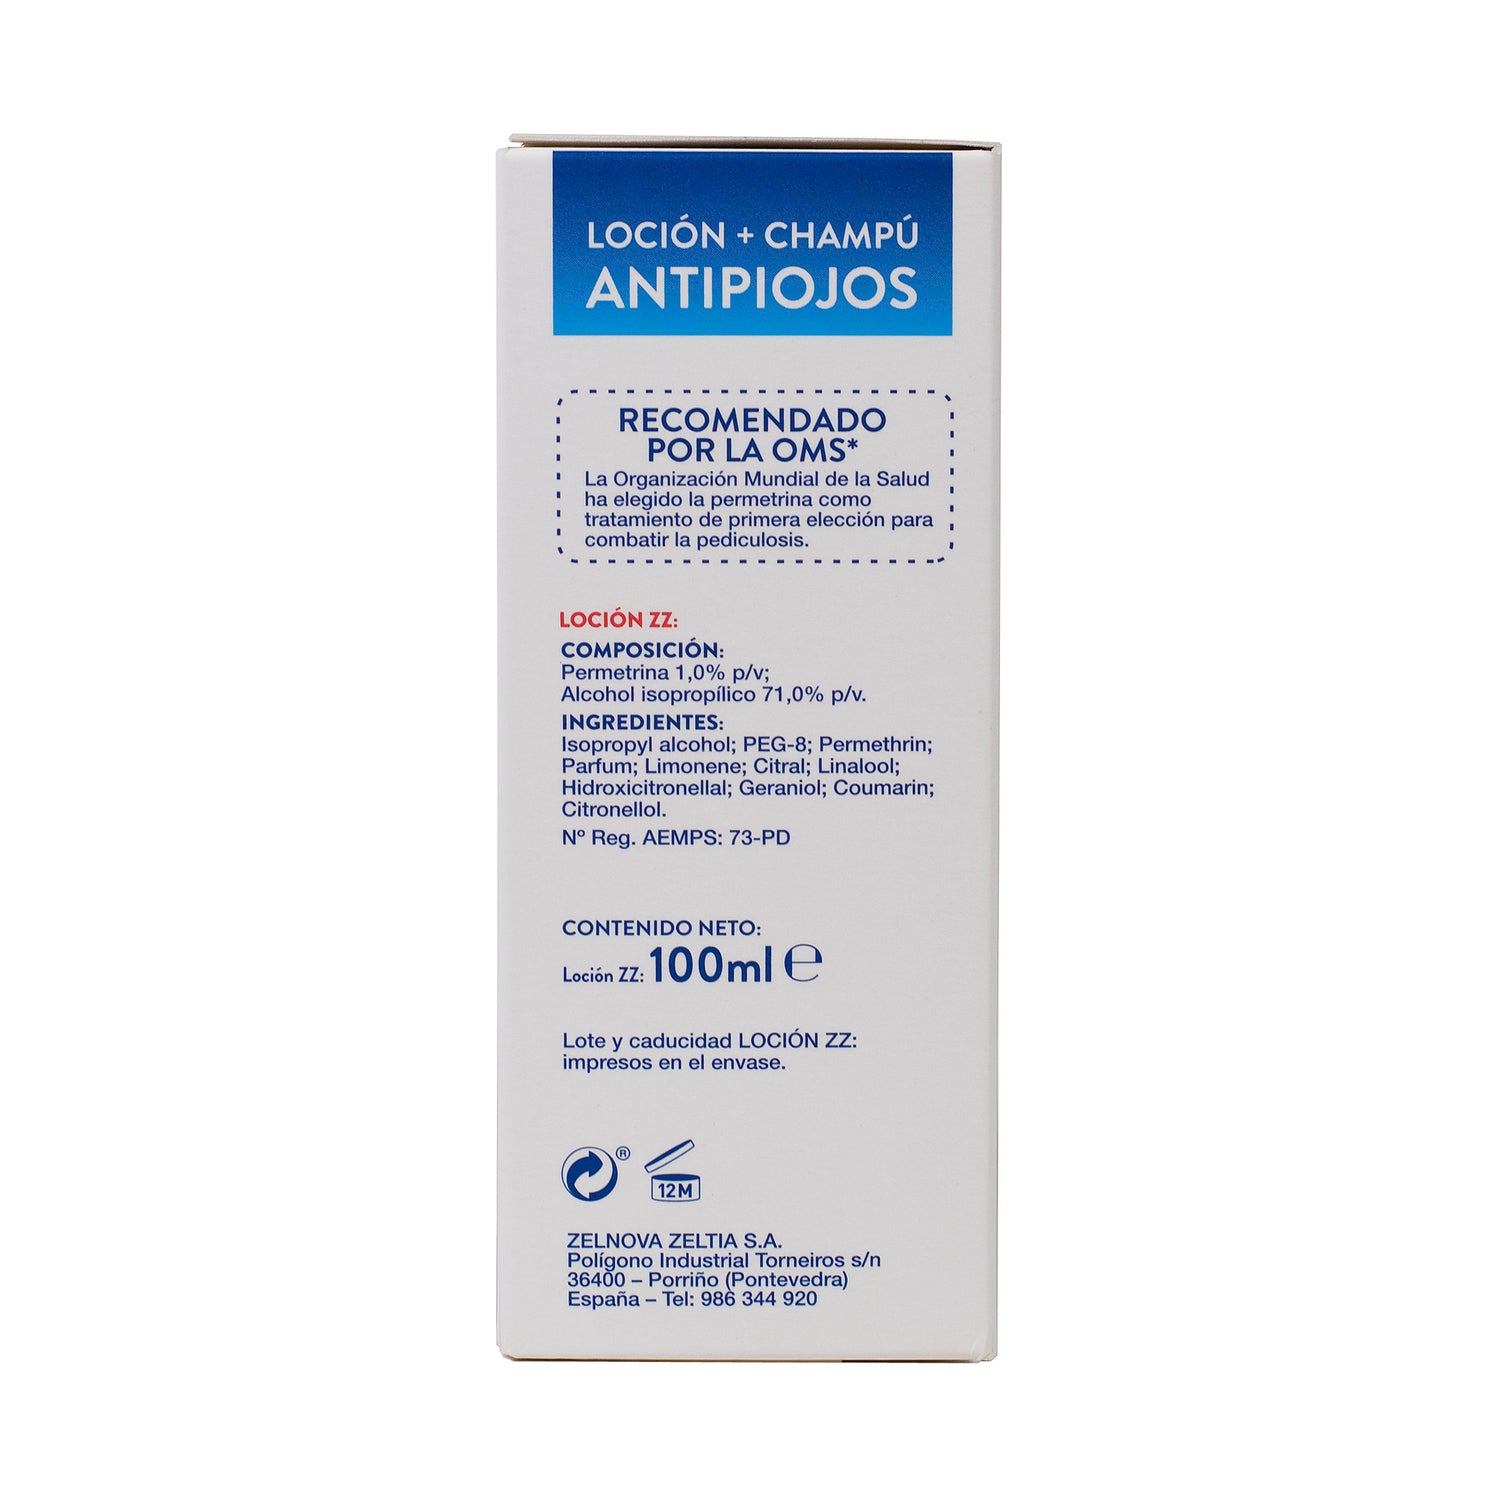 Zz locion + champu antipiojos (100 ml +125 ml) - Farmacia online